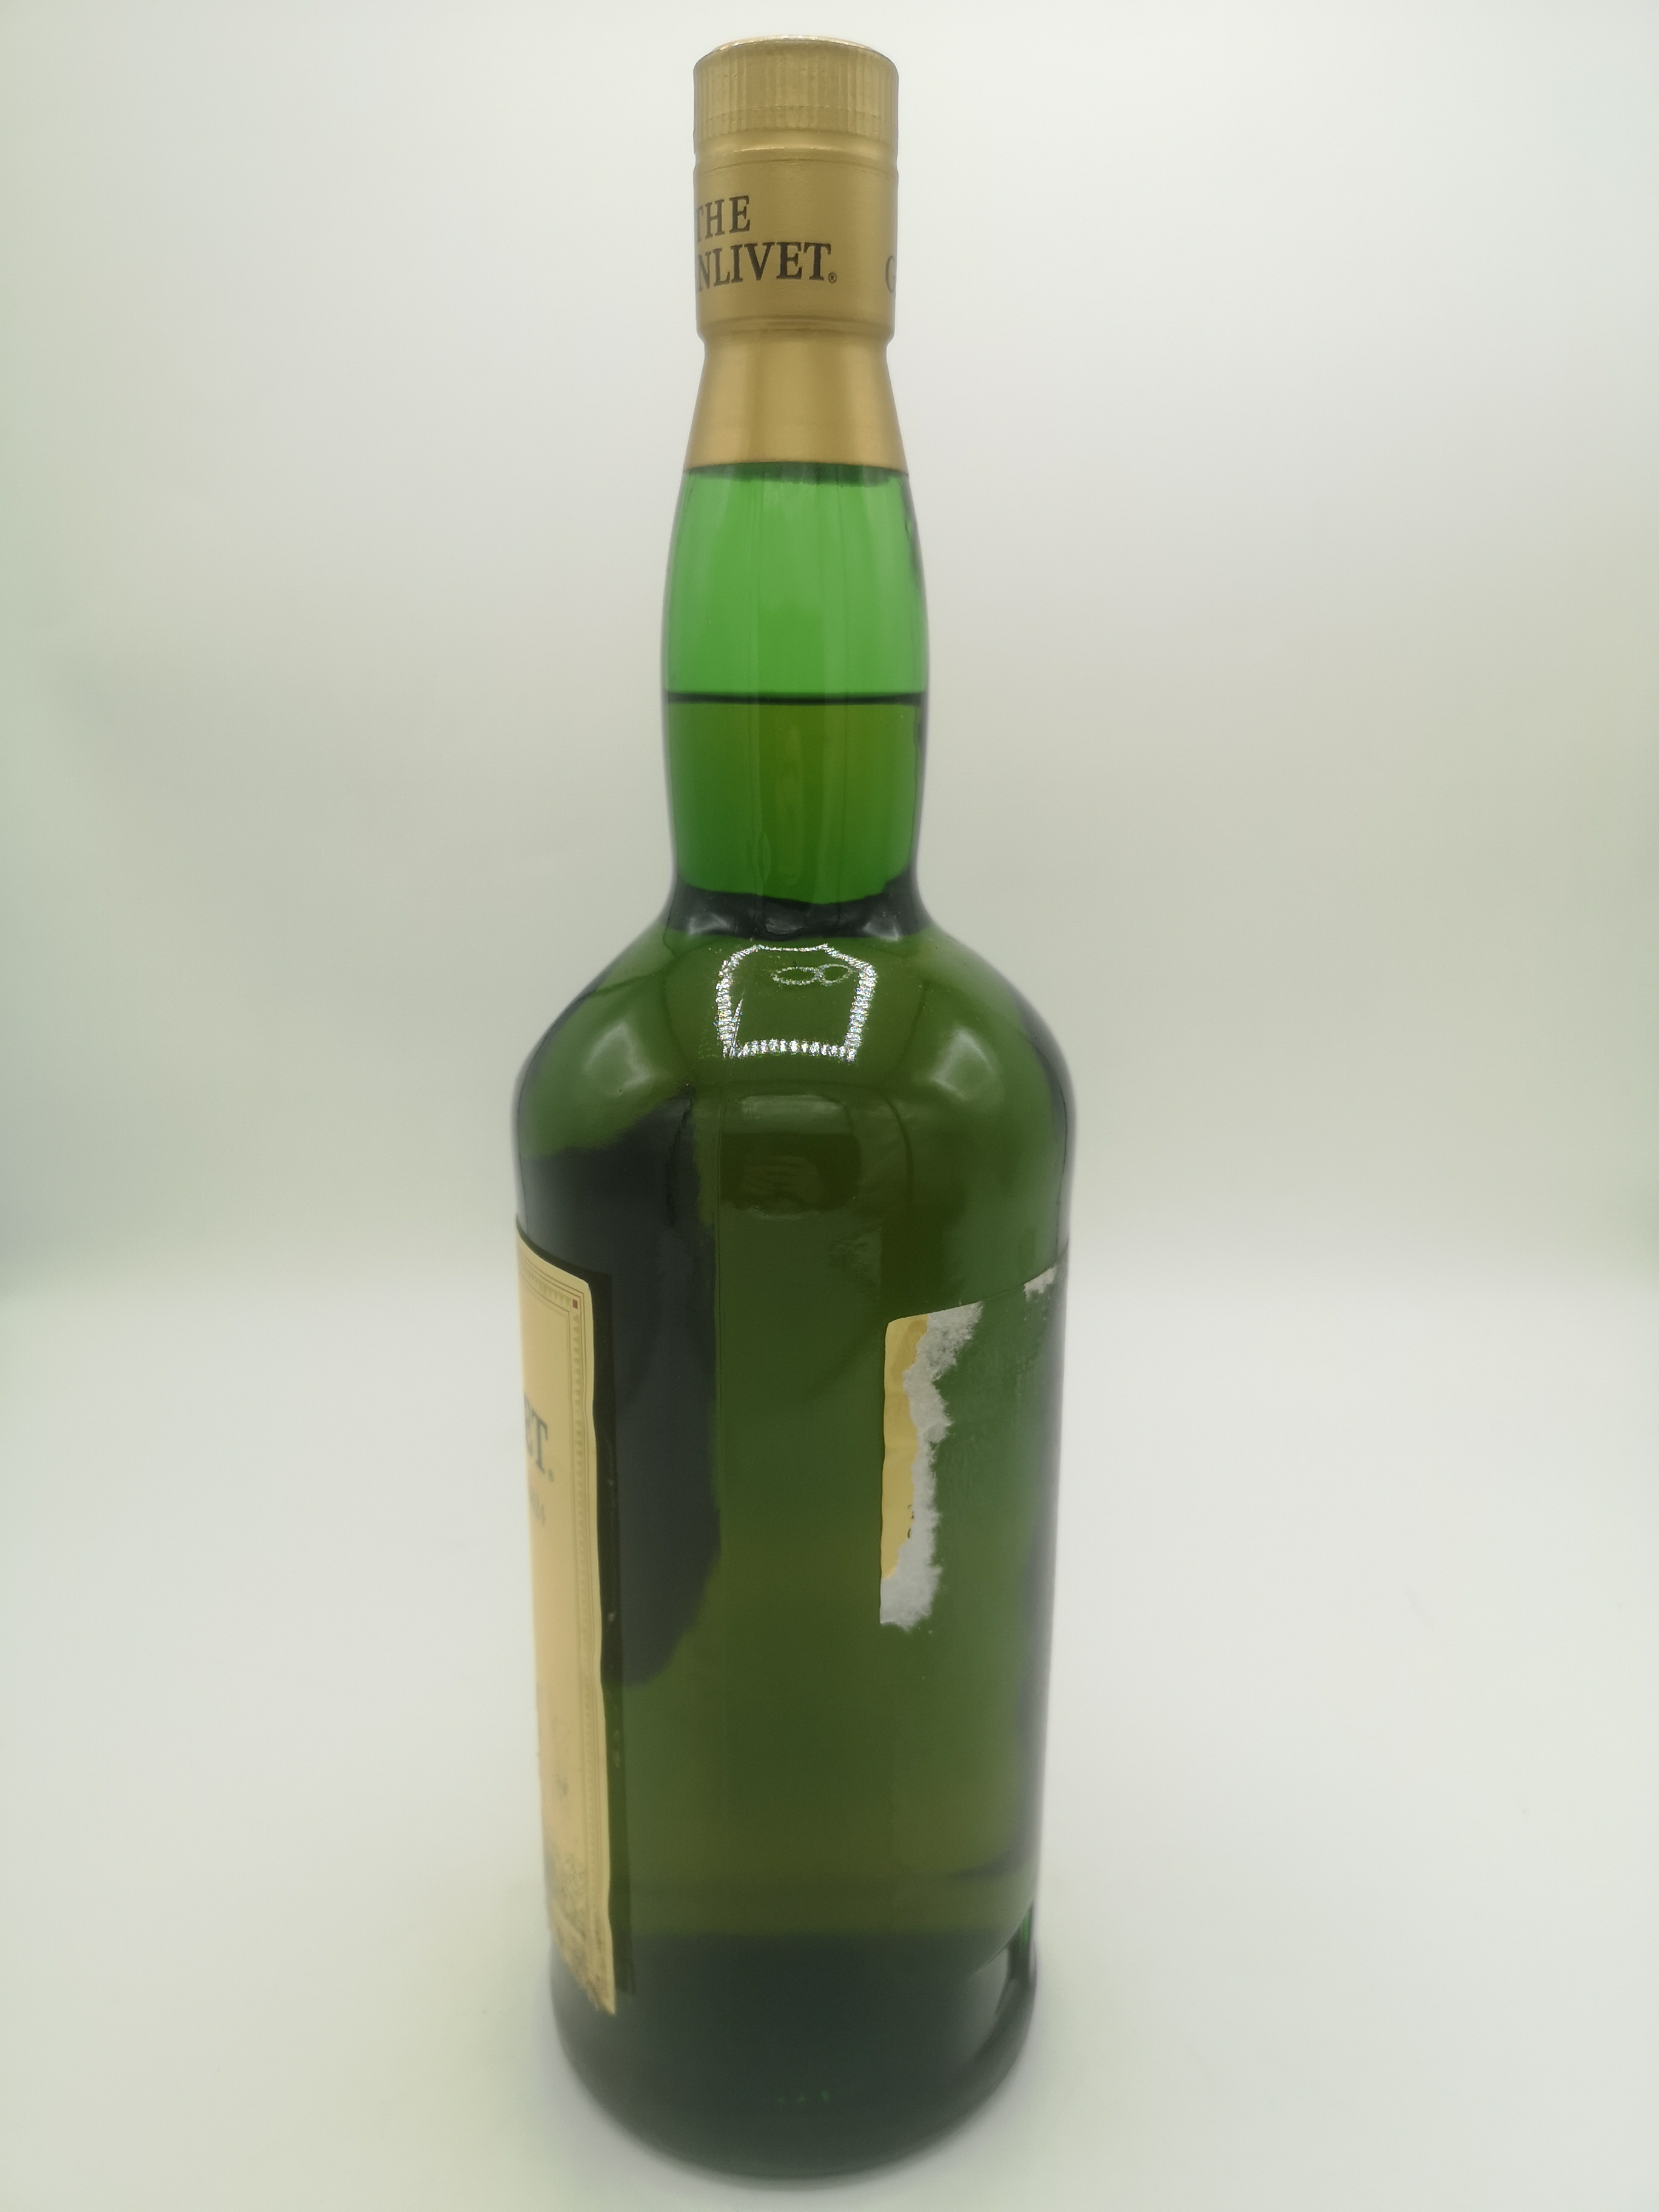 The Glenlivet, 1l pure single malt Scotch whisky - Image 2 of 8